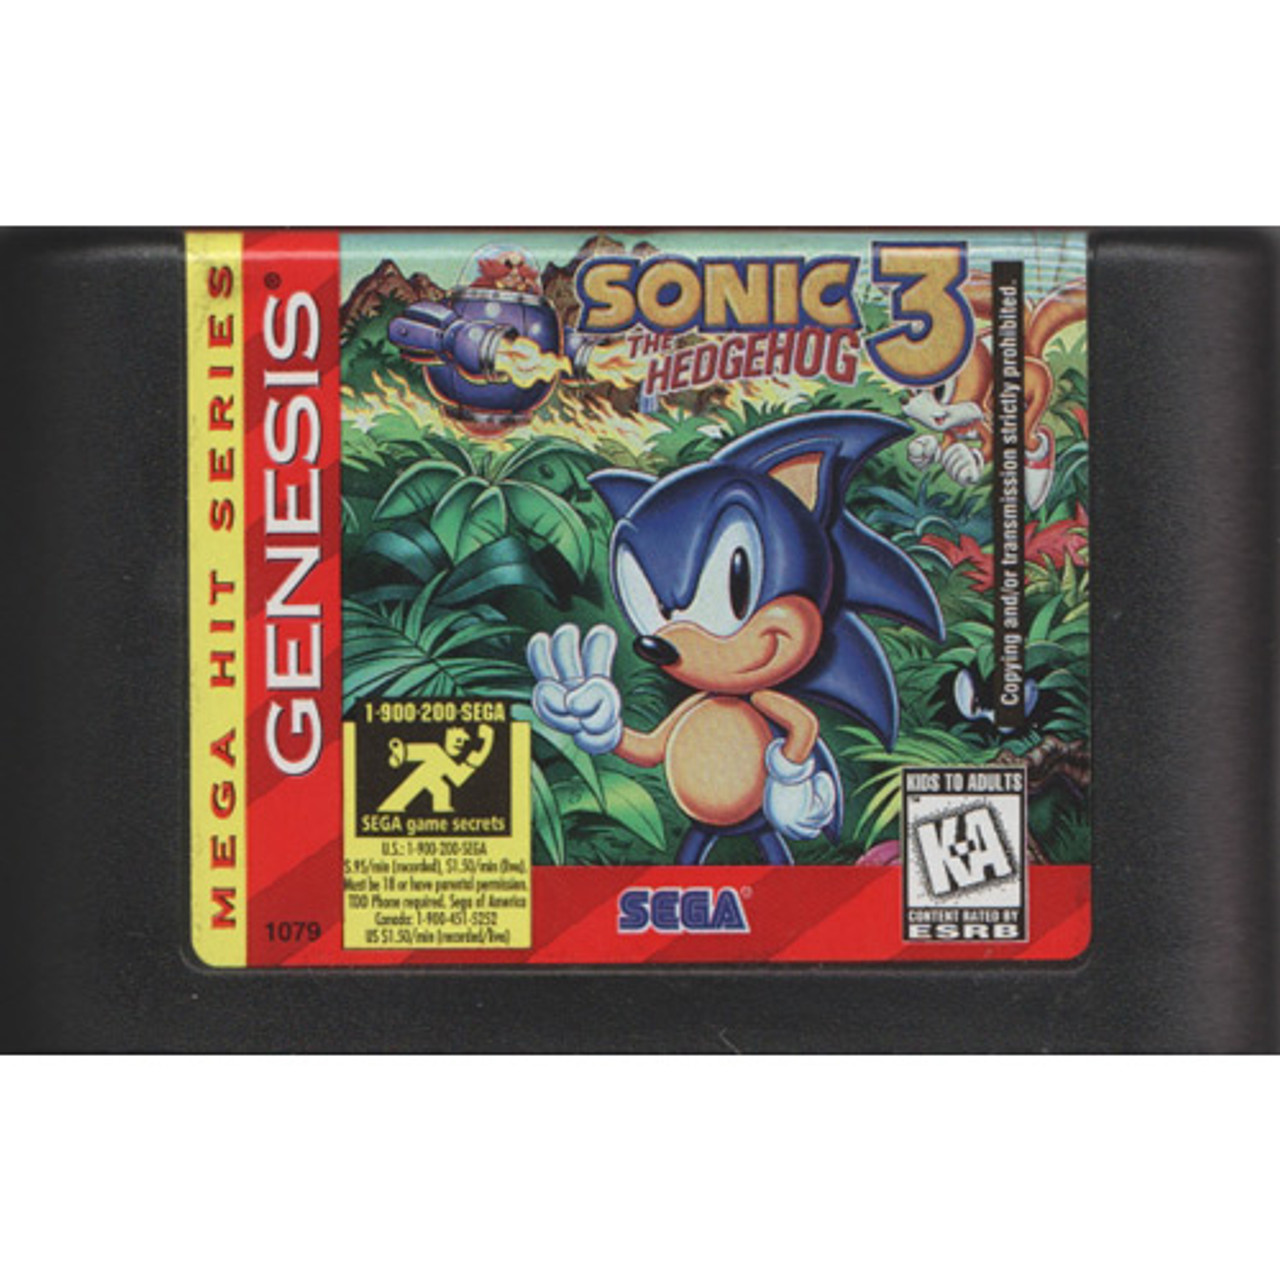  Sonic the Hedgehog - Playstation 3 : Sega of America